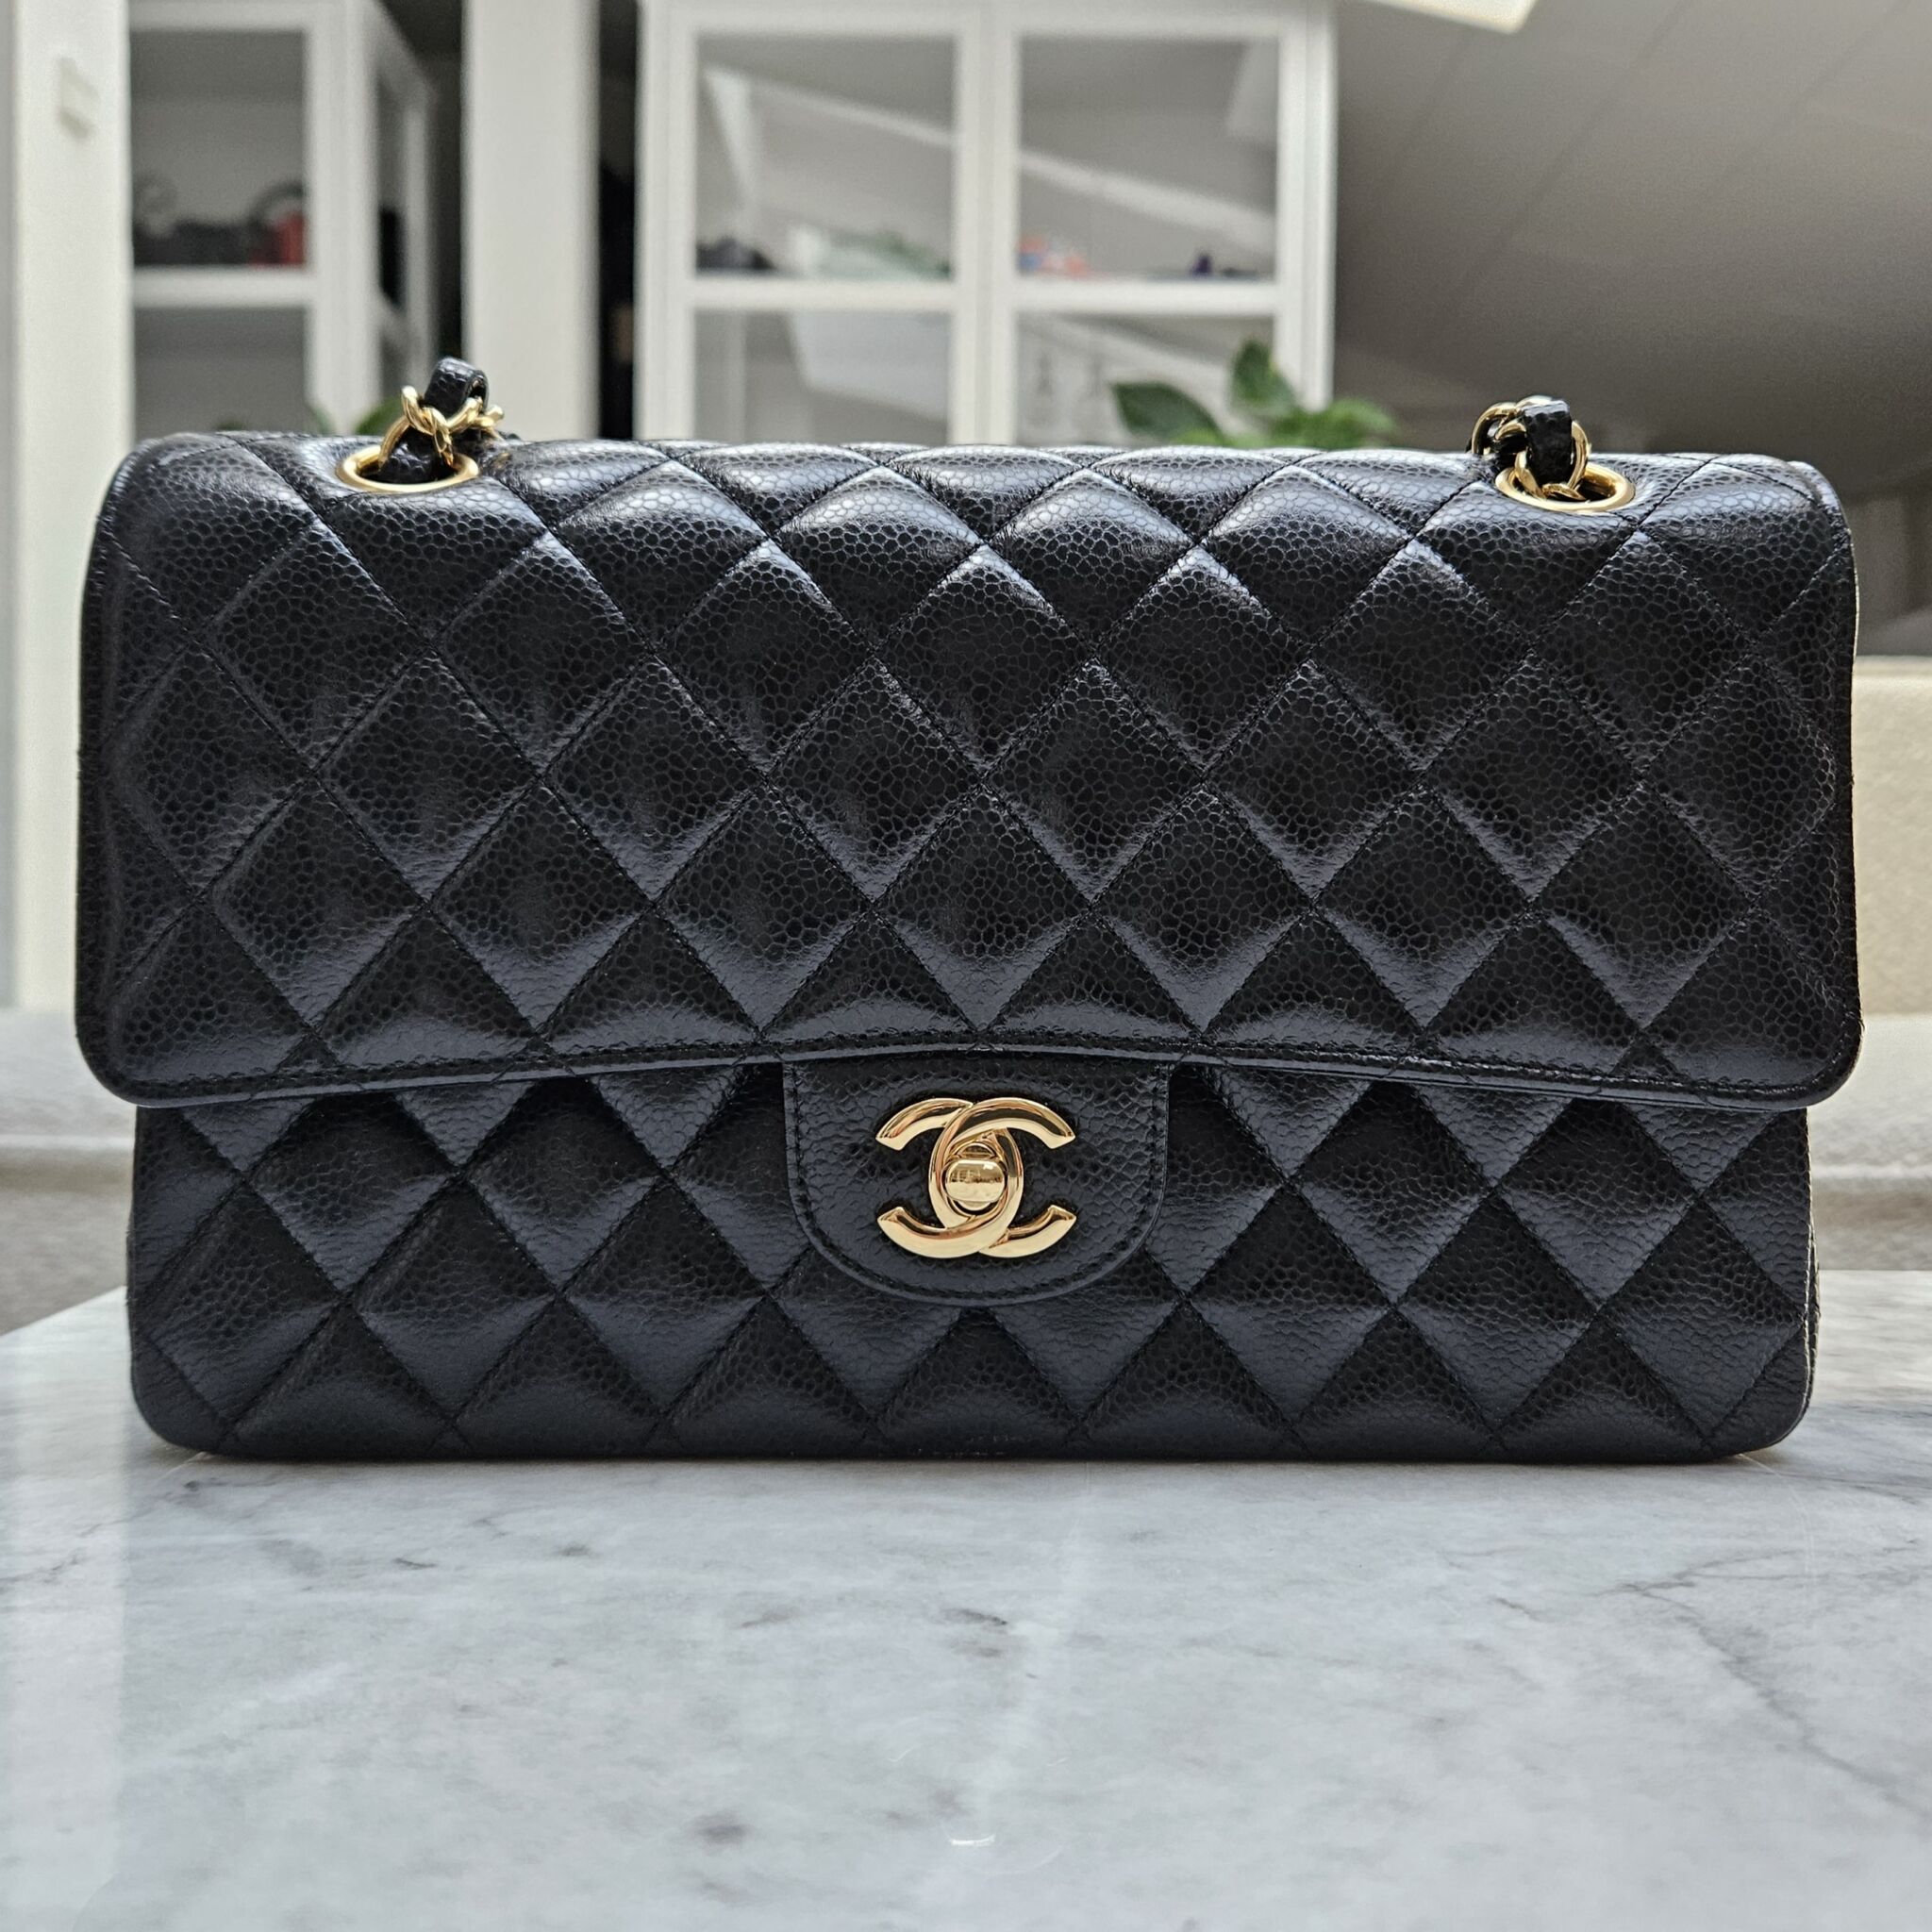 Chanel Medium Classic, Caviar, Black GHW - Laulay Luxury